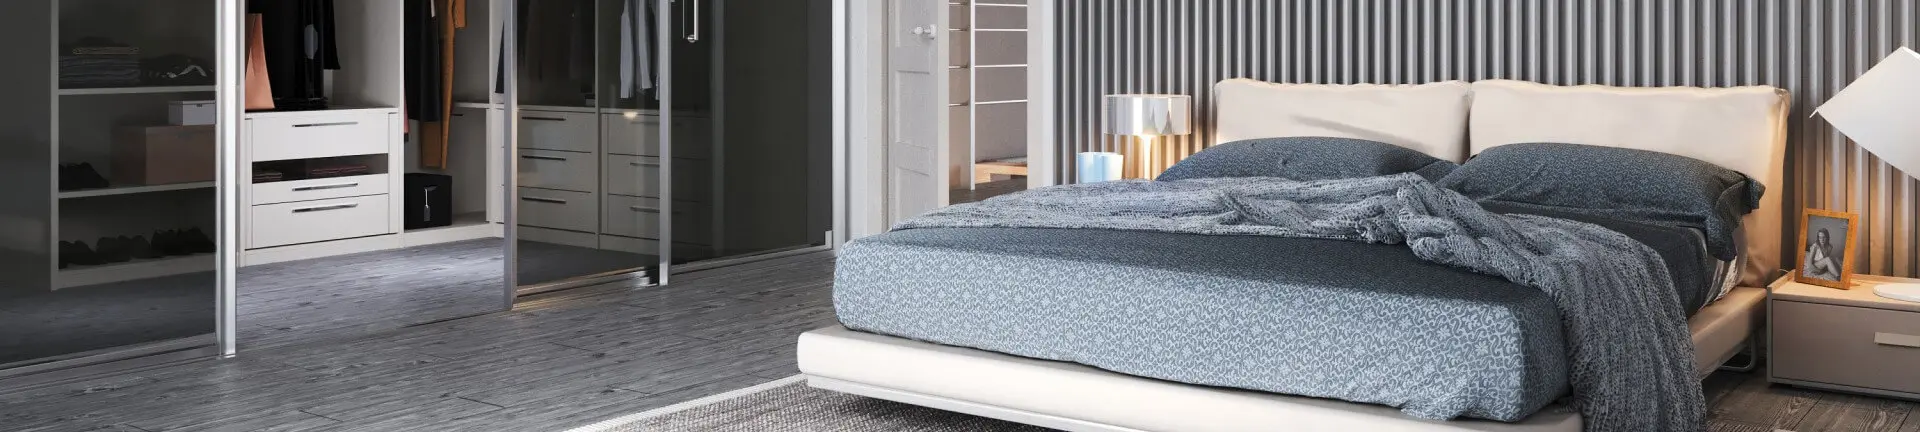 Stylish bedroom design for long-term rentals